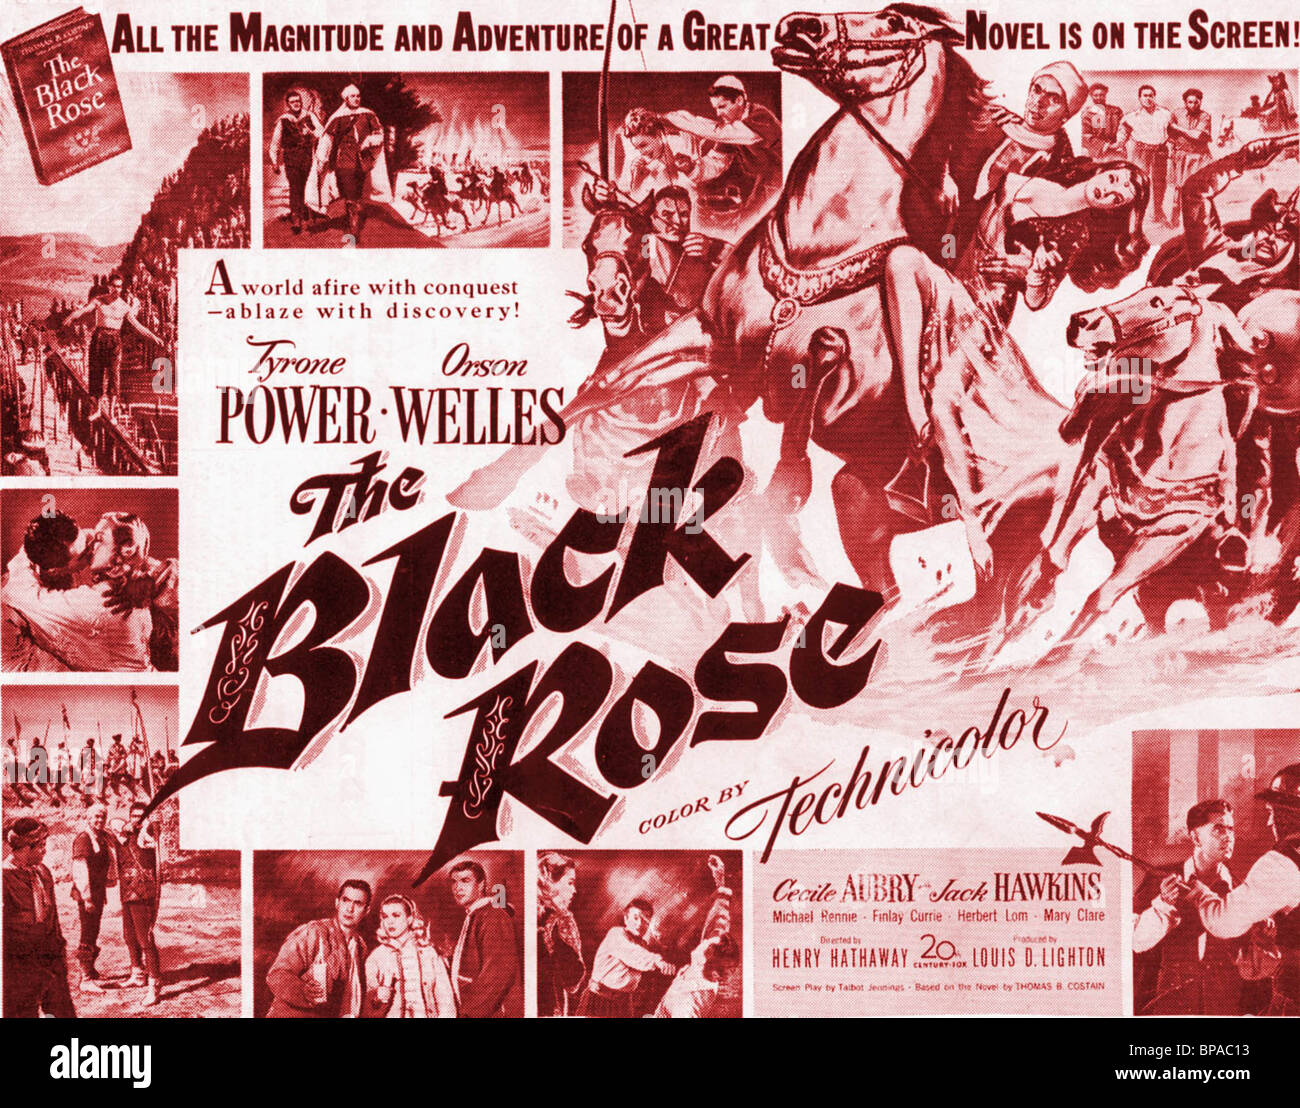 L'AFFICHE DU FILM THE BLACK ROSE (1950) Banque D'Images